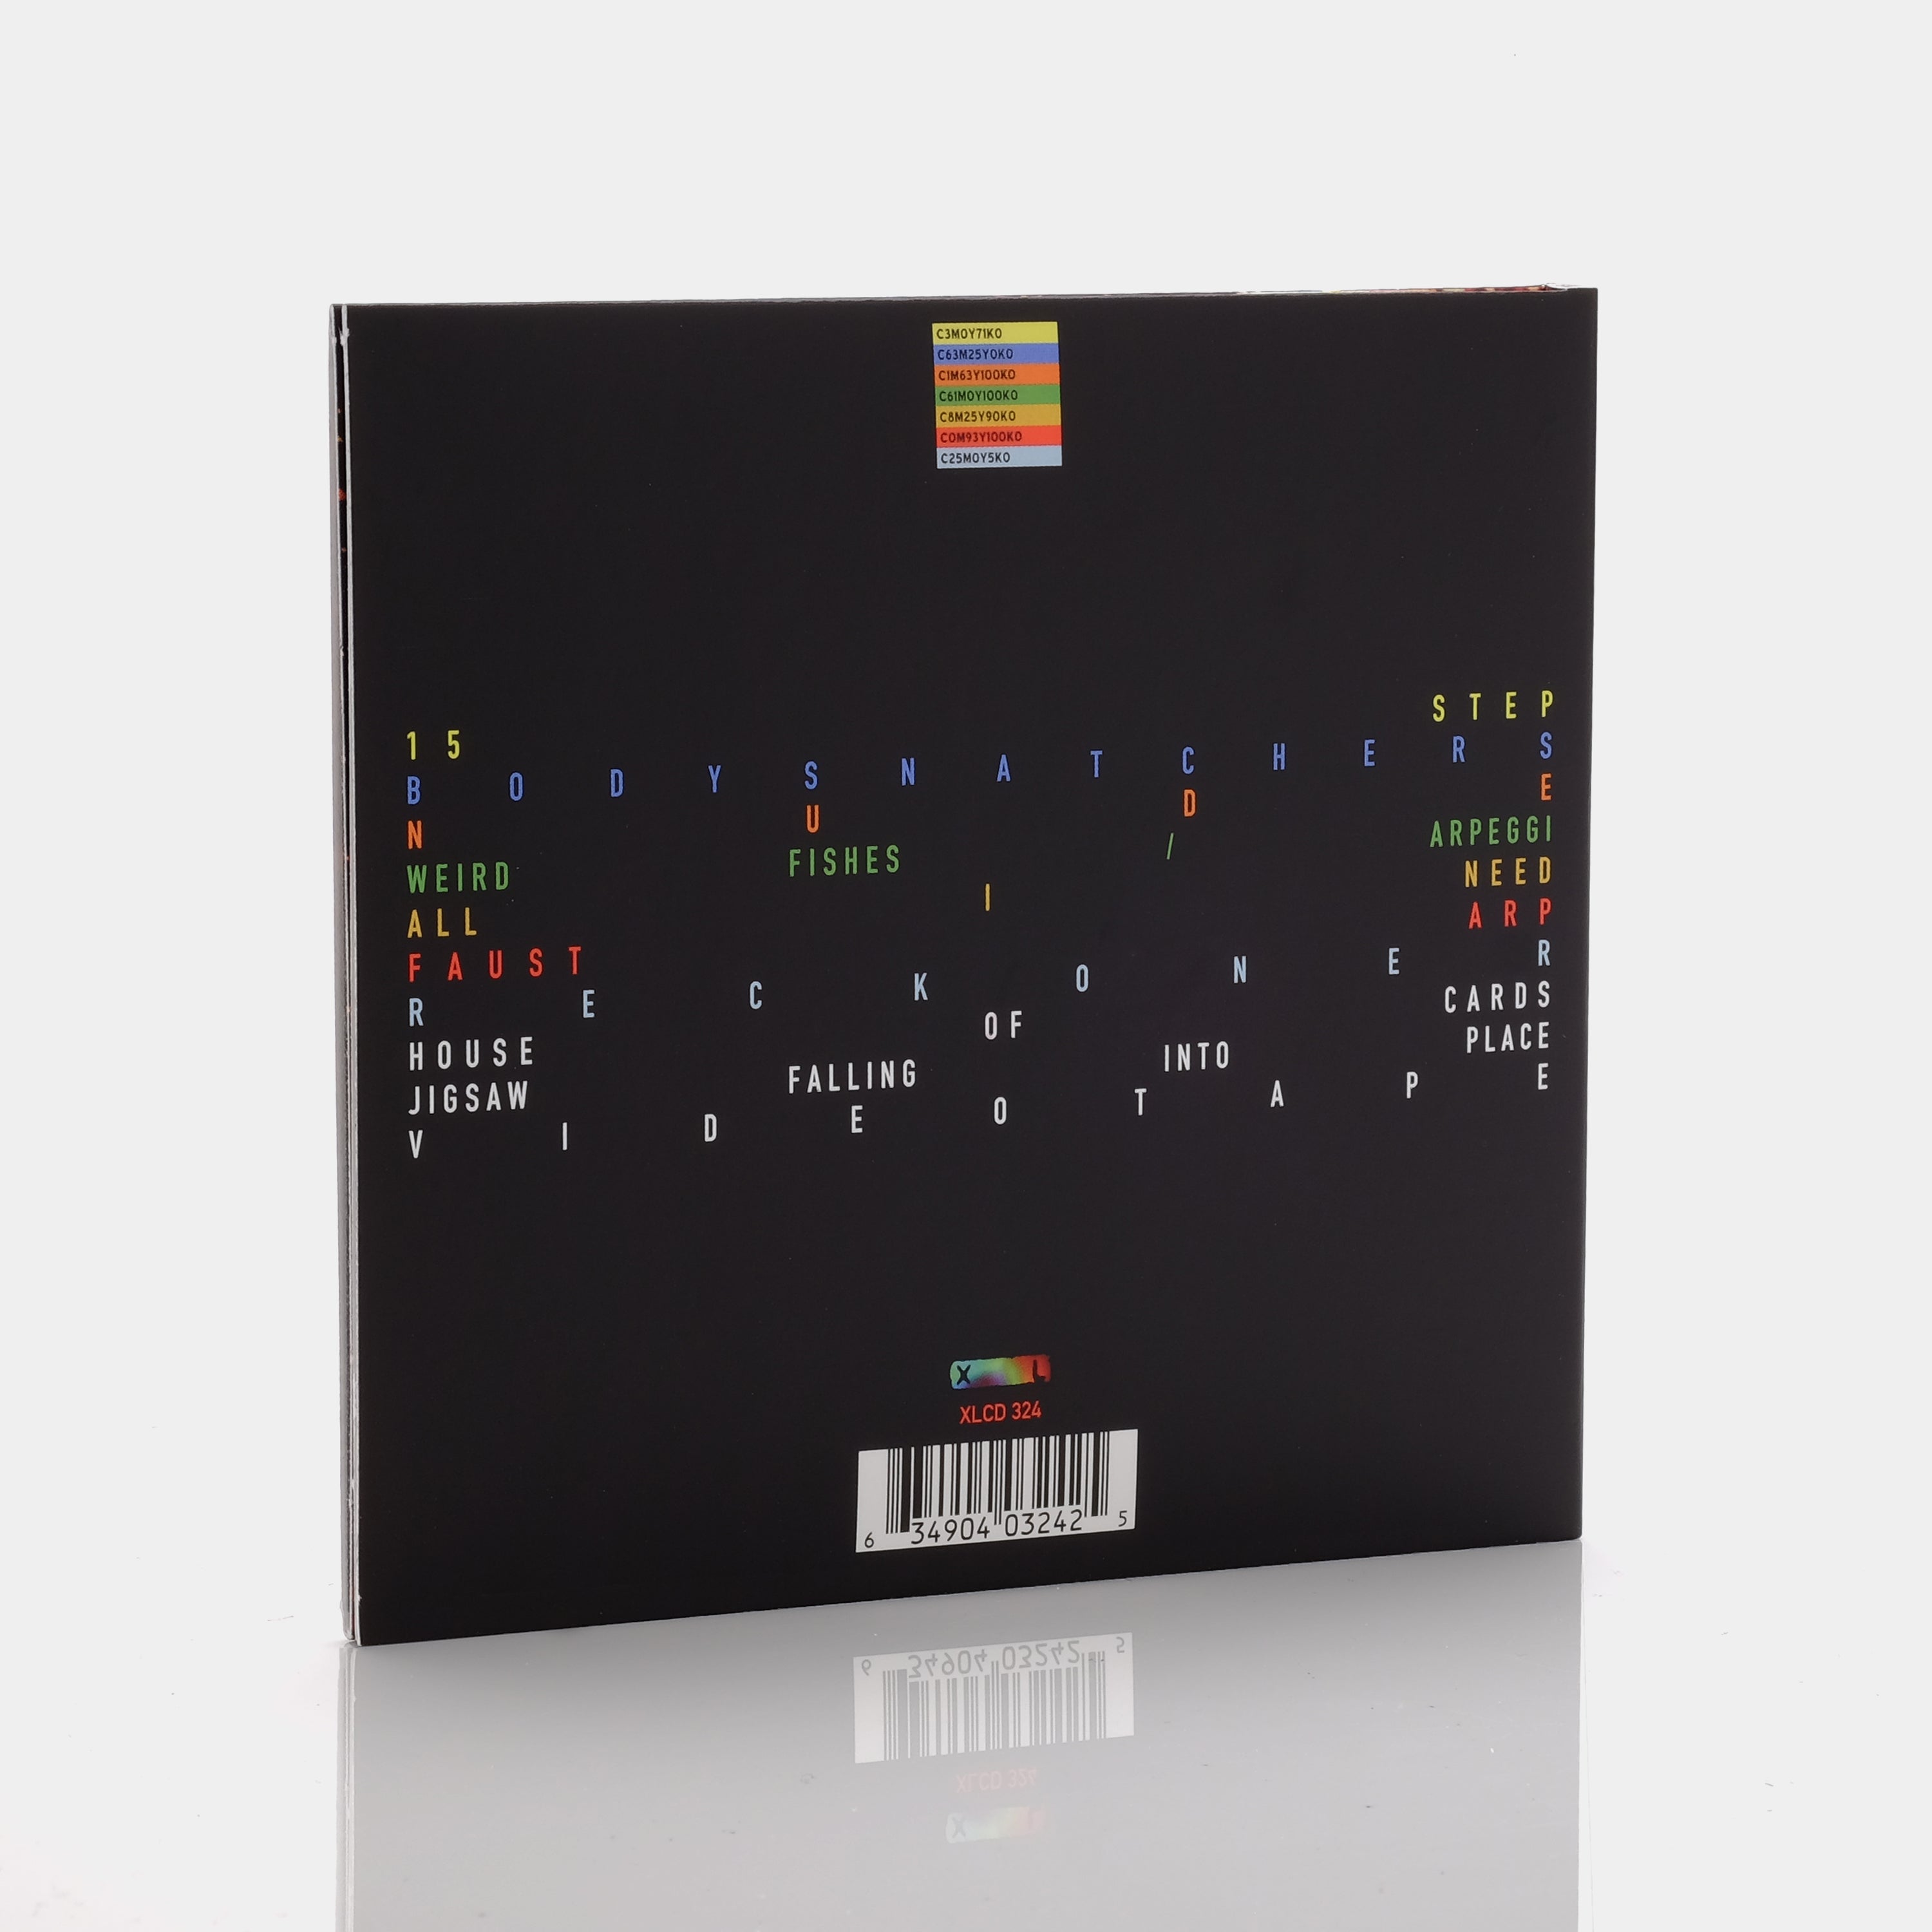 Radiohead - In Rainbows CD